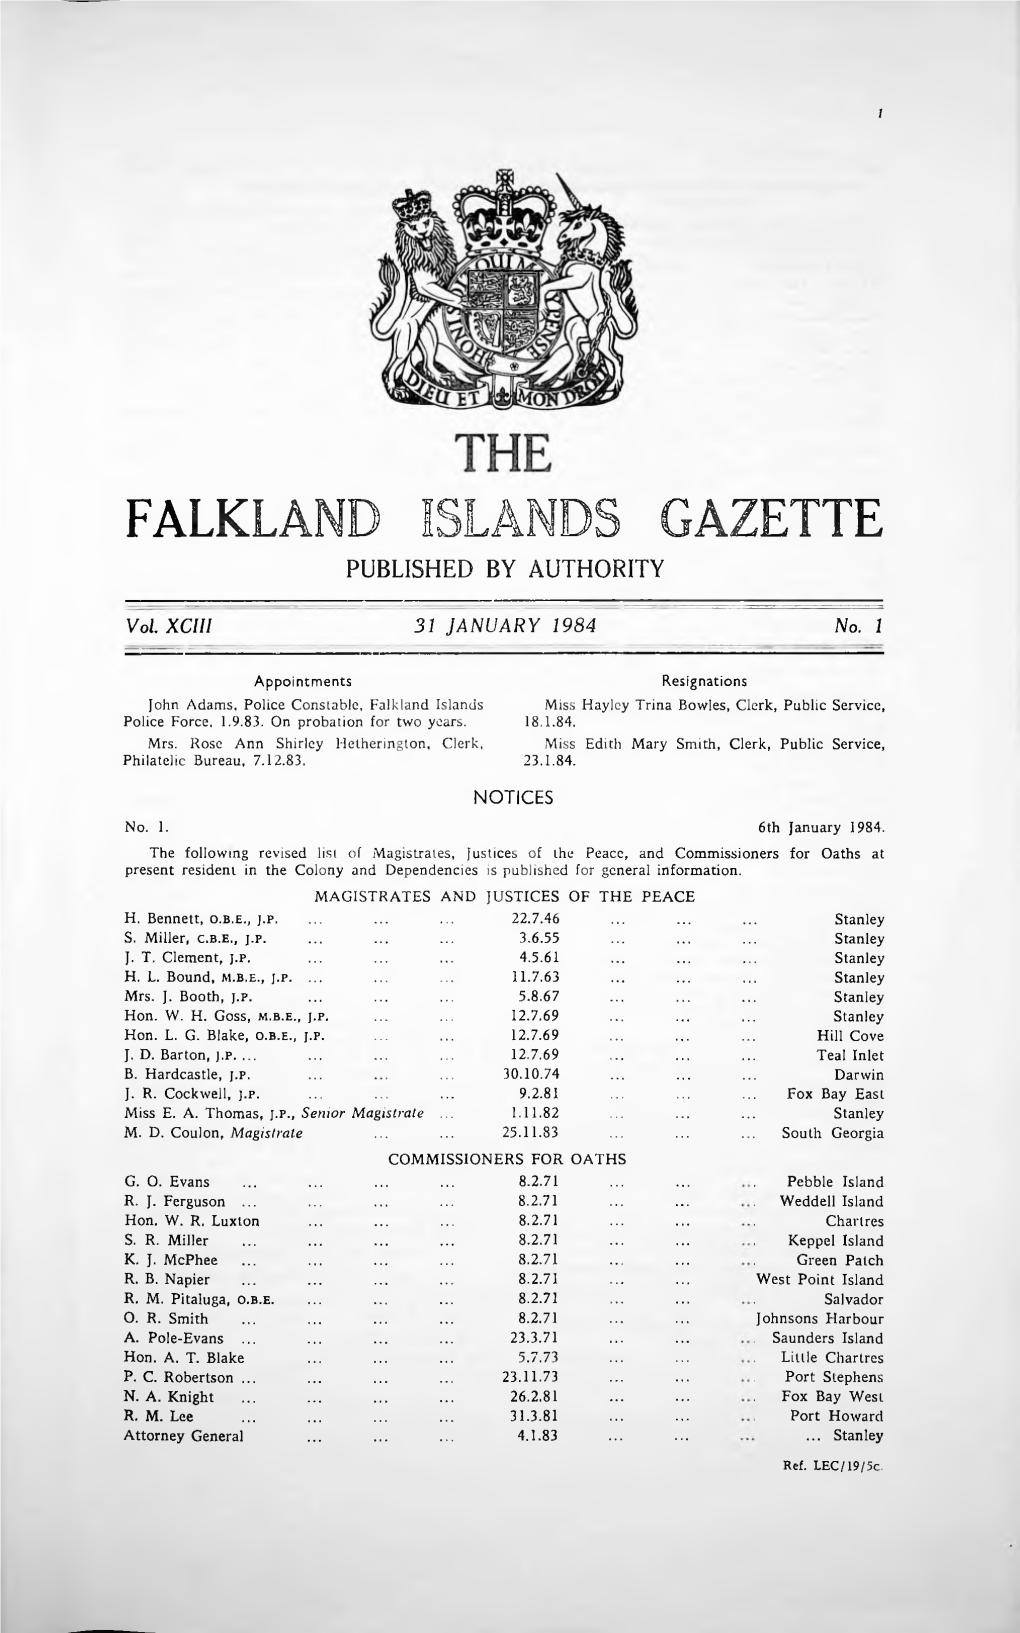 Falkland Islands Gazette Published by Authority